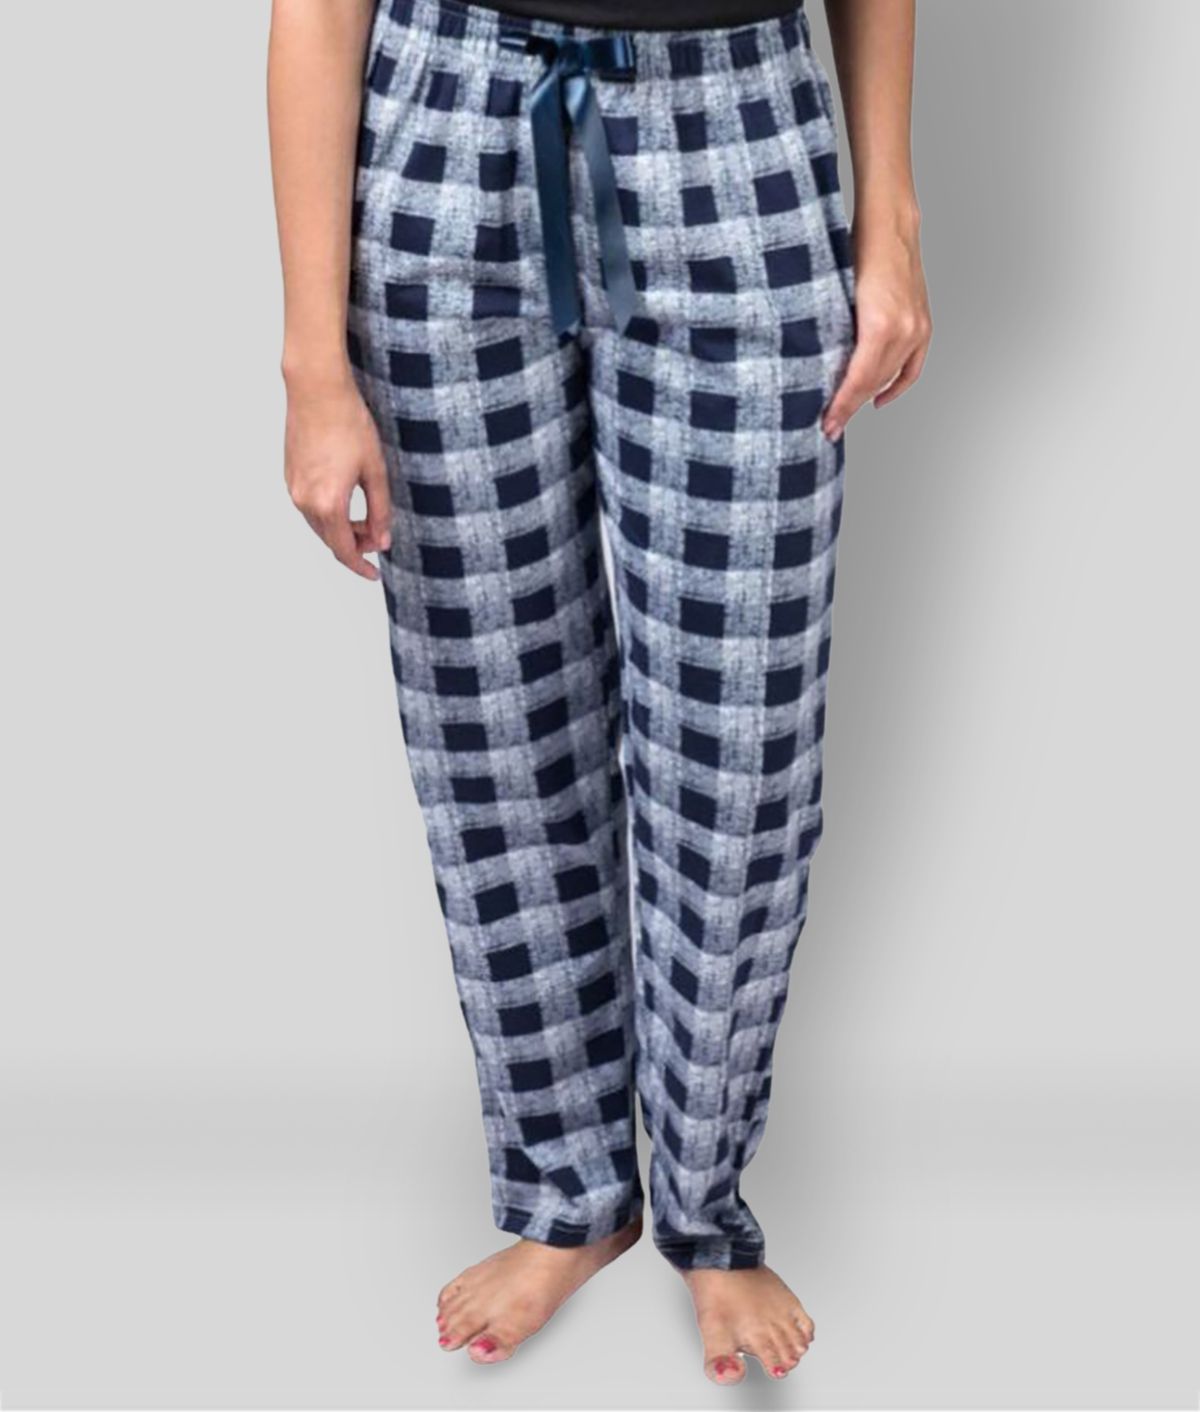     			Nite Flite - Navy Blue Cotton Women's Nightwear Pyjama